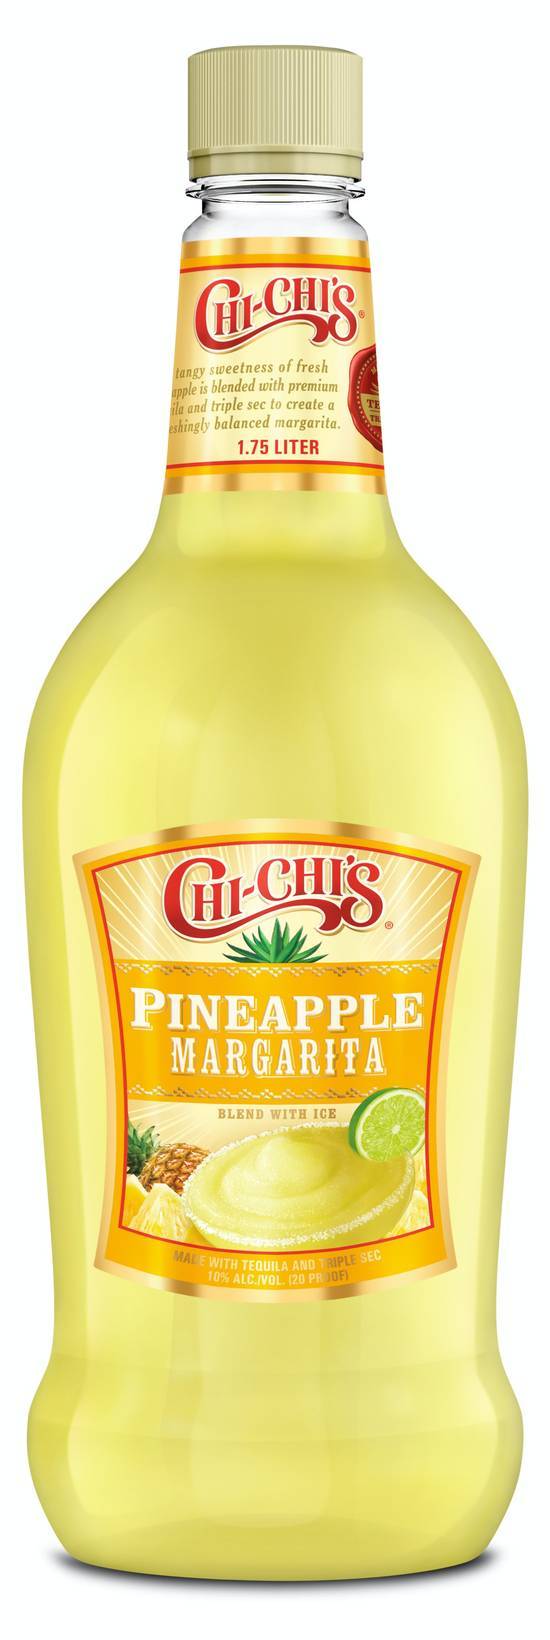 Chi Chi Pineapple Margarita (1.75L bottle)